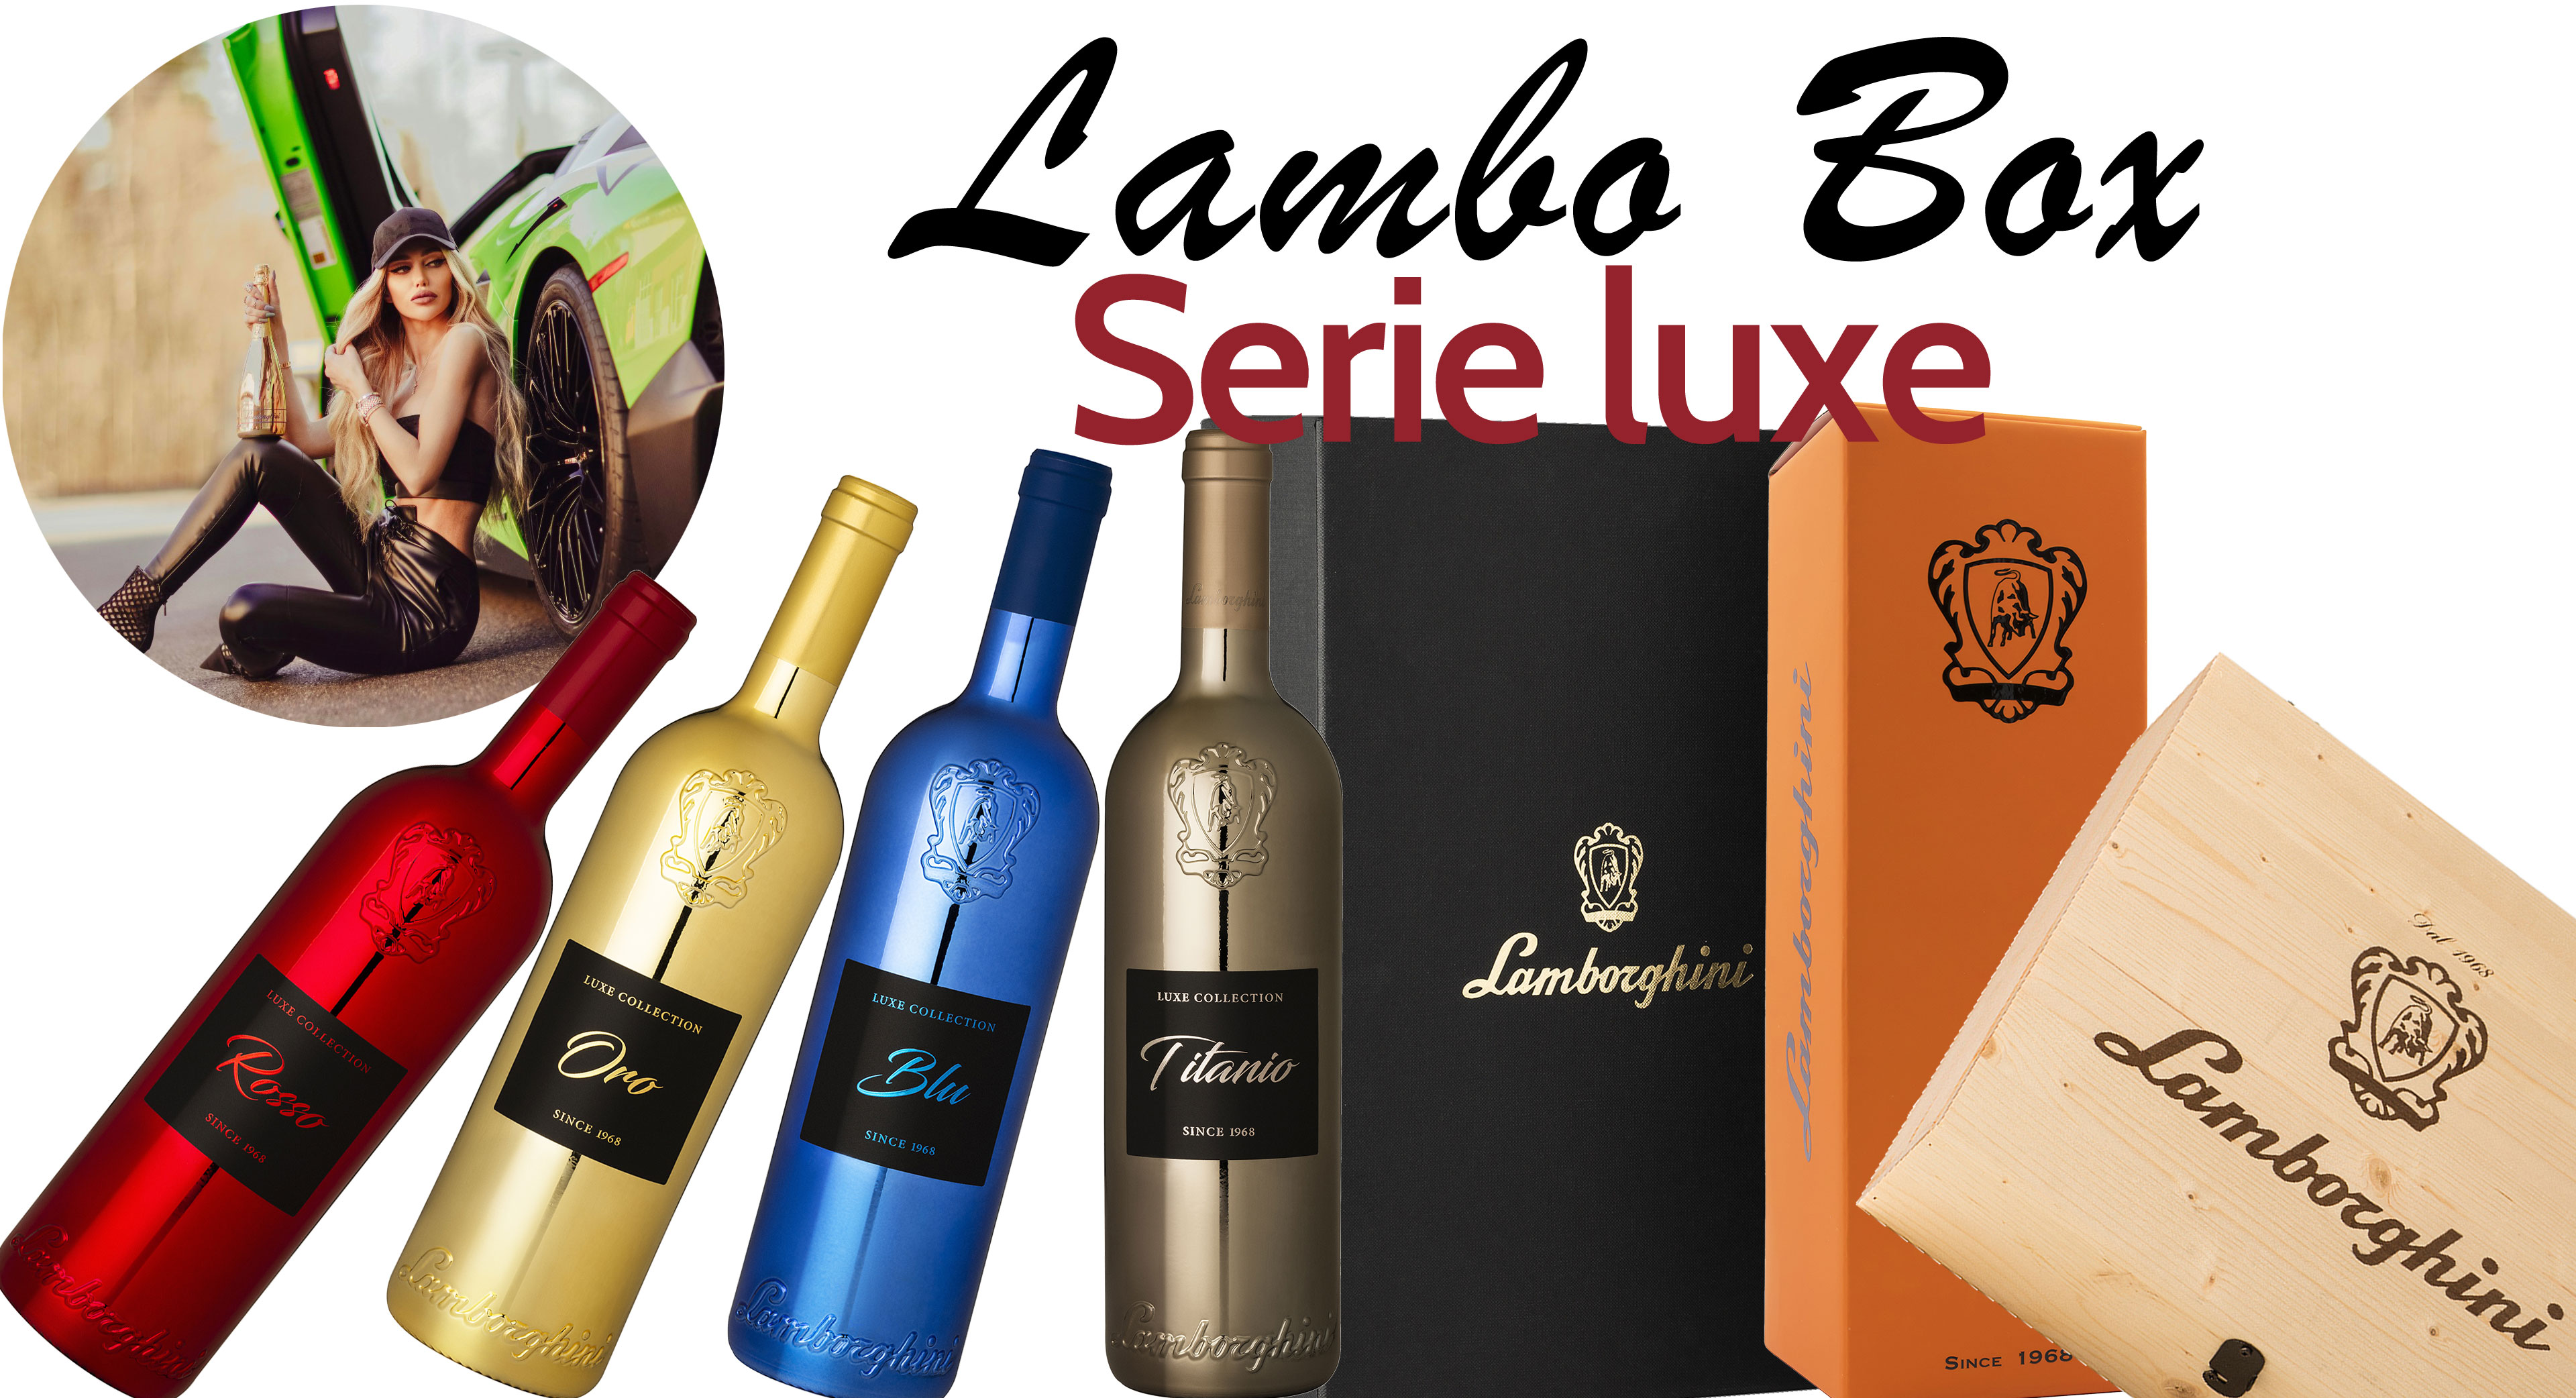 Lambo Box Serie luxe